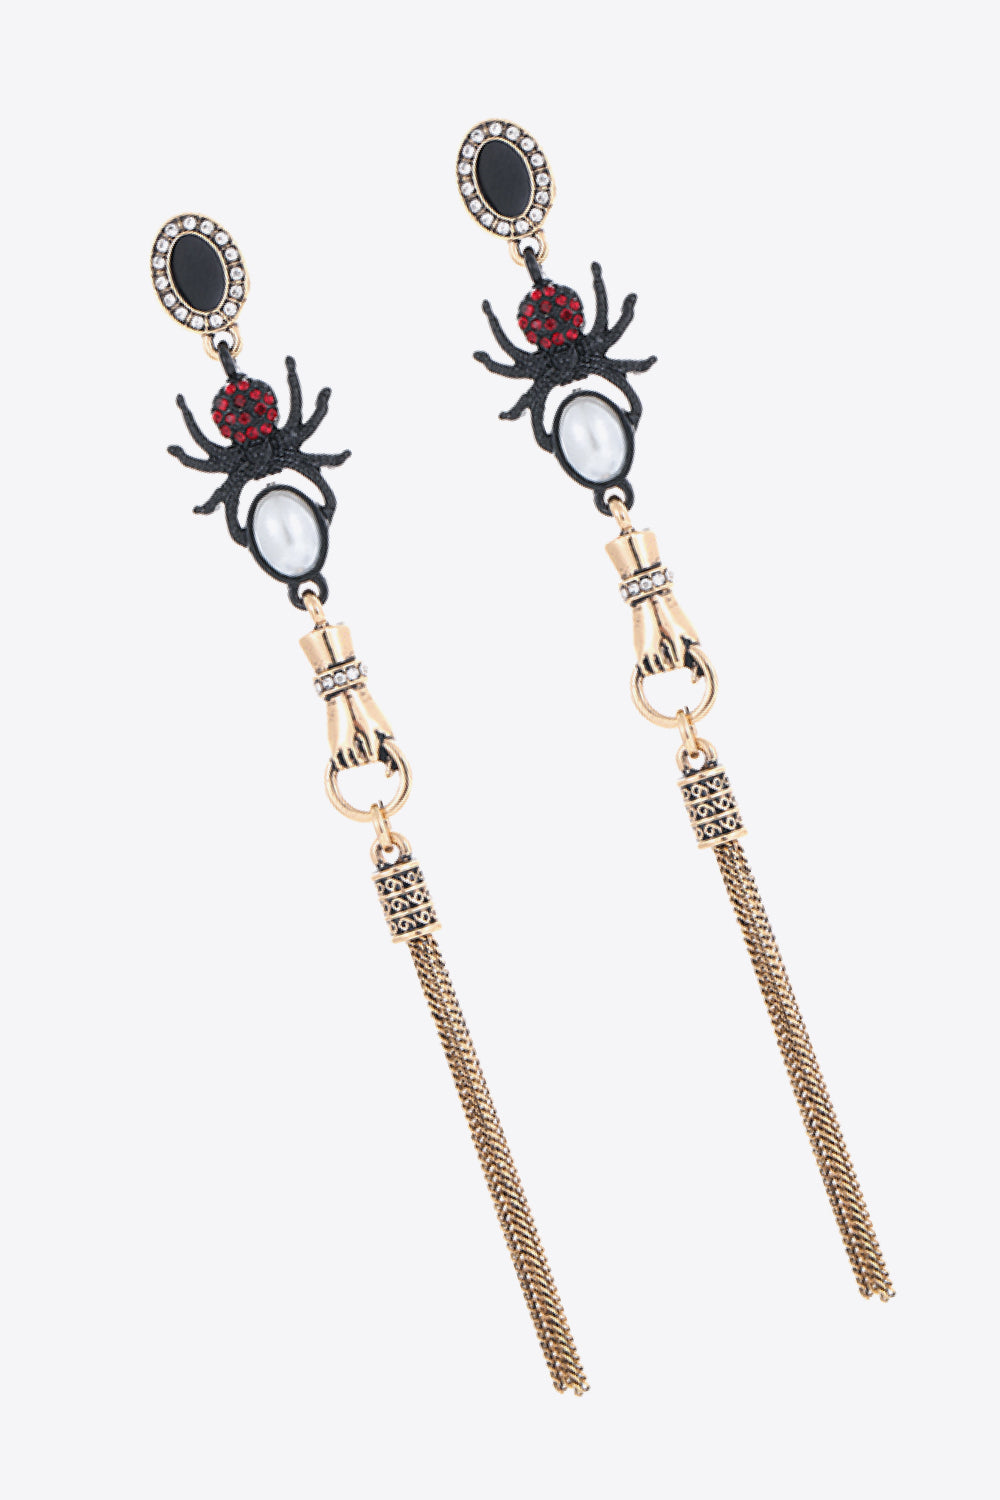 18K Gold-Plated Spider Drop Earrings - Earrings - FITGGINS